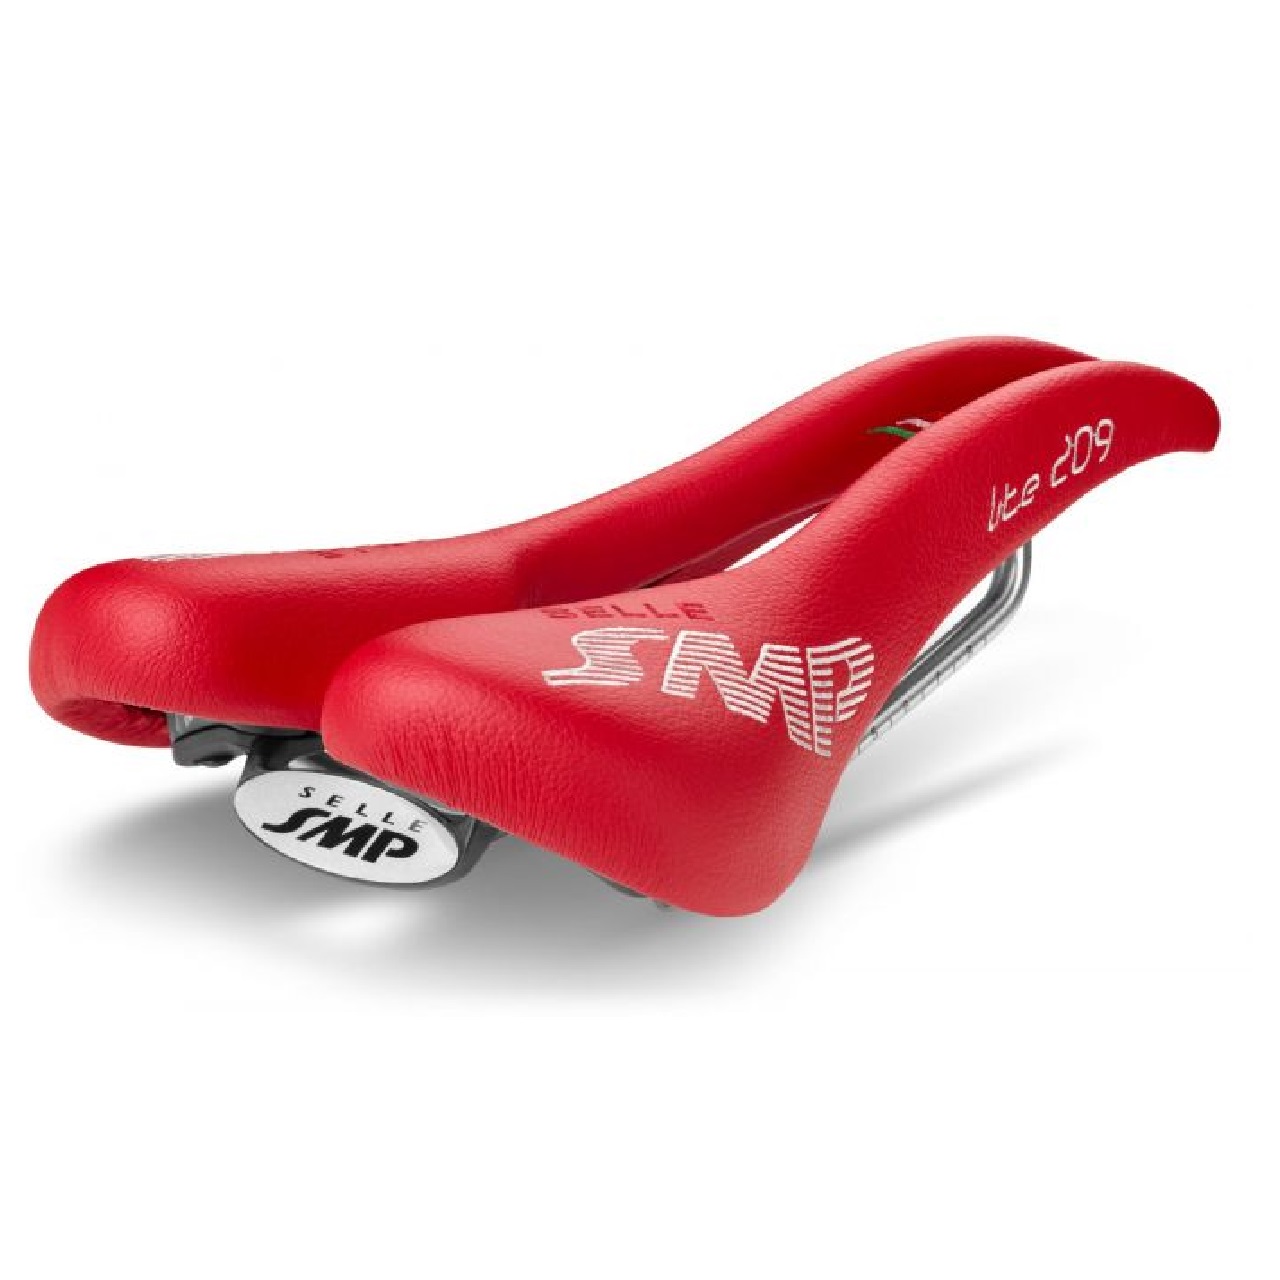 Selle SMP Lite 209 Pro Bike Saddle Bike Seat Red